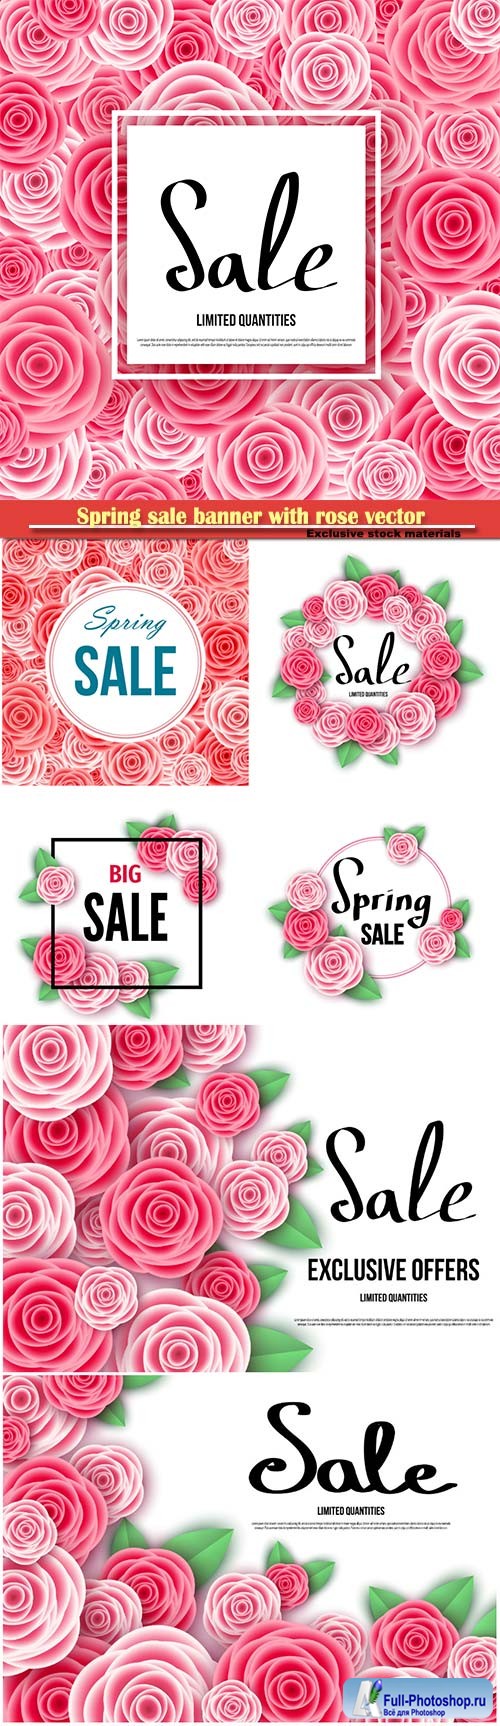 Spring sale banner with rose vector illustration